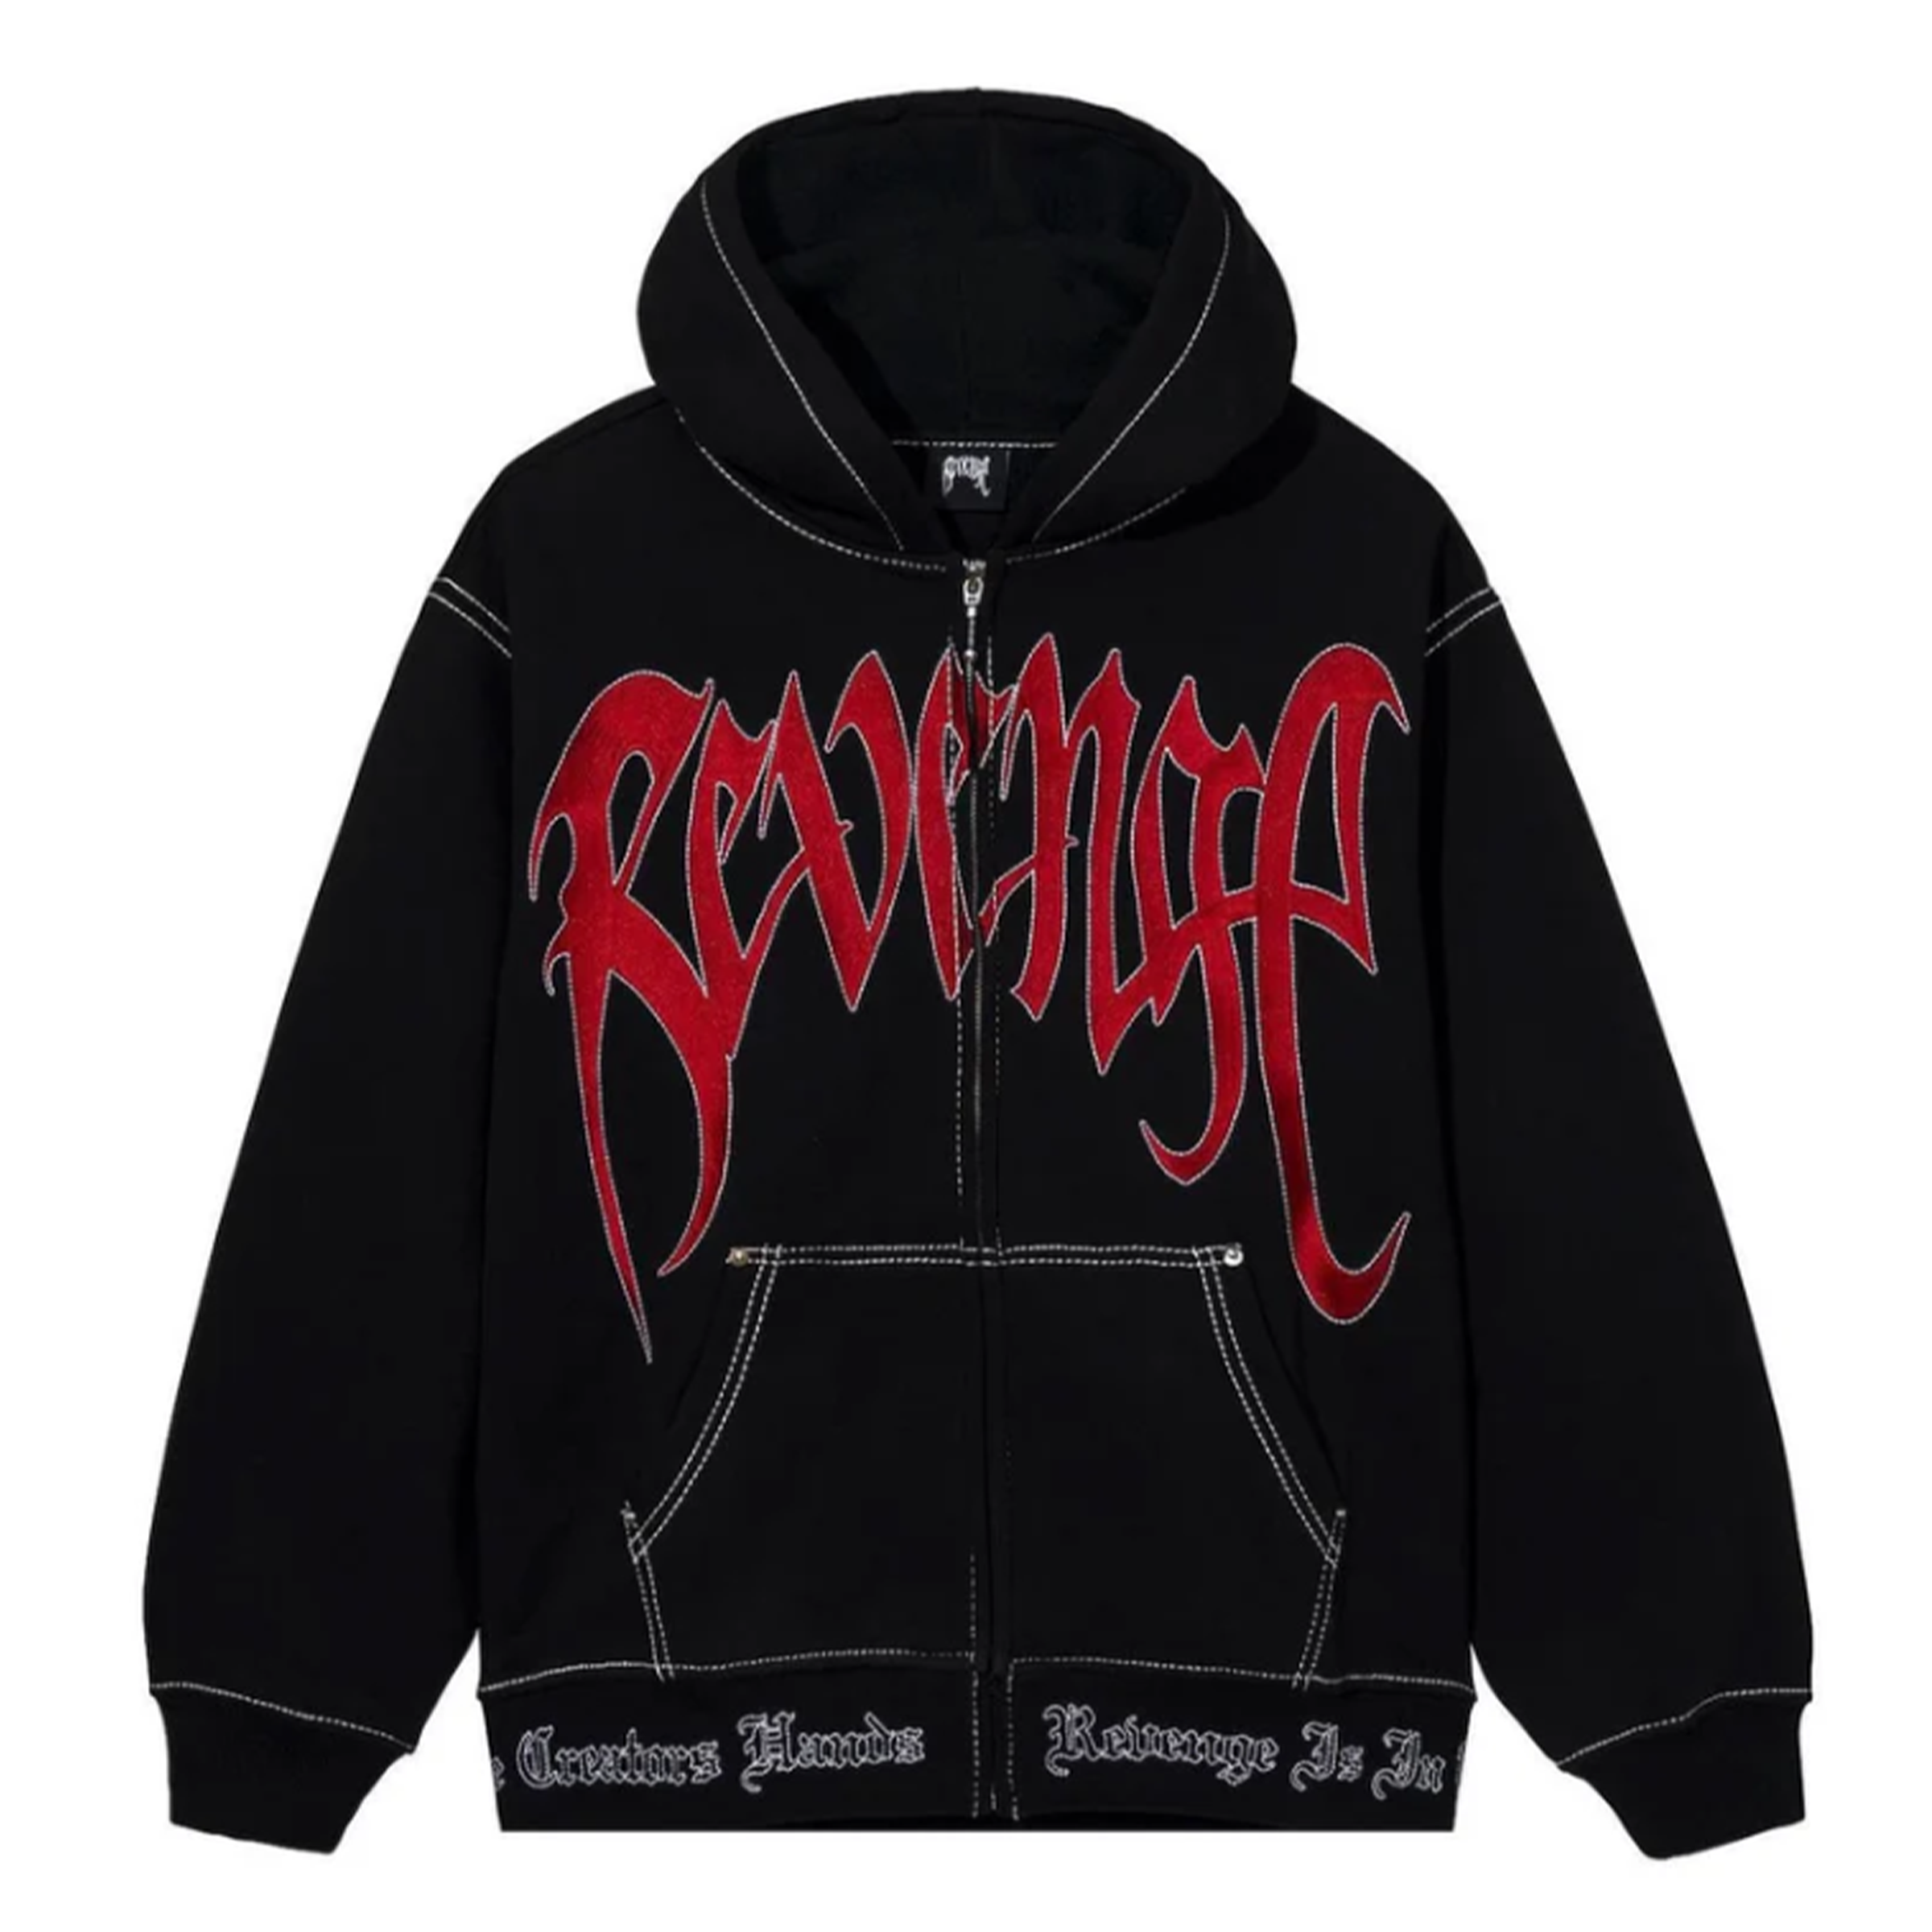 Revenge "Contrast Stitch" Hooded Zip-Up Sweatshirt